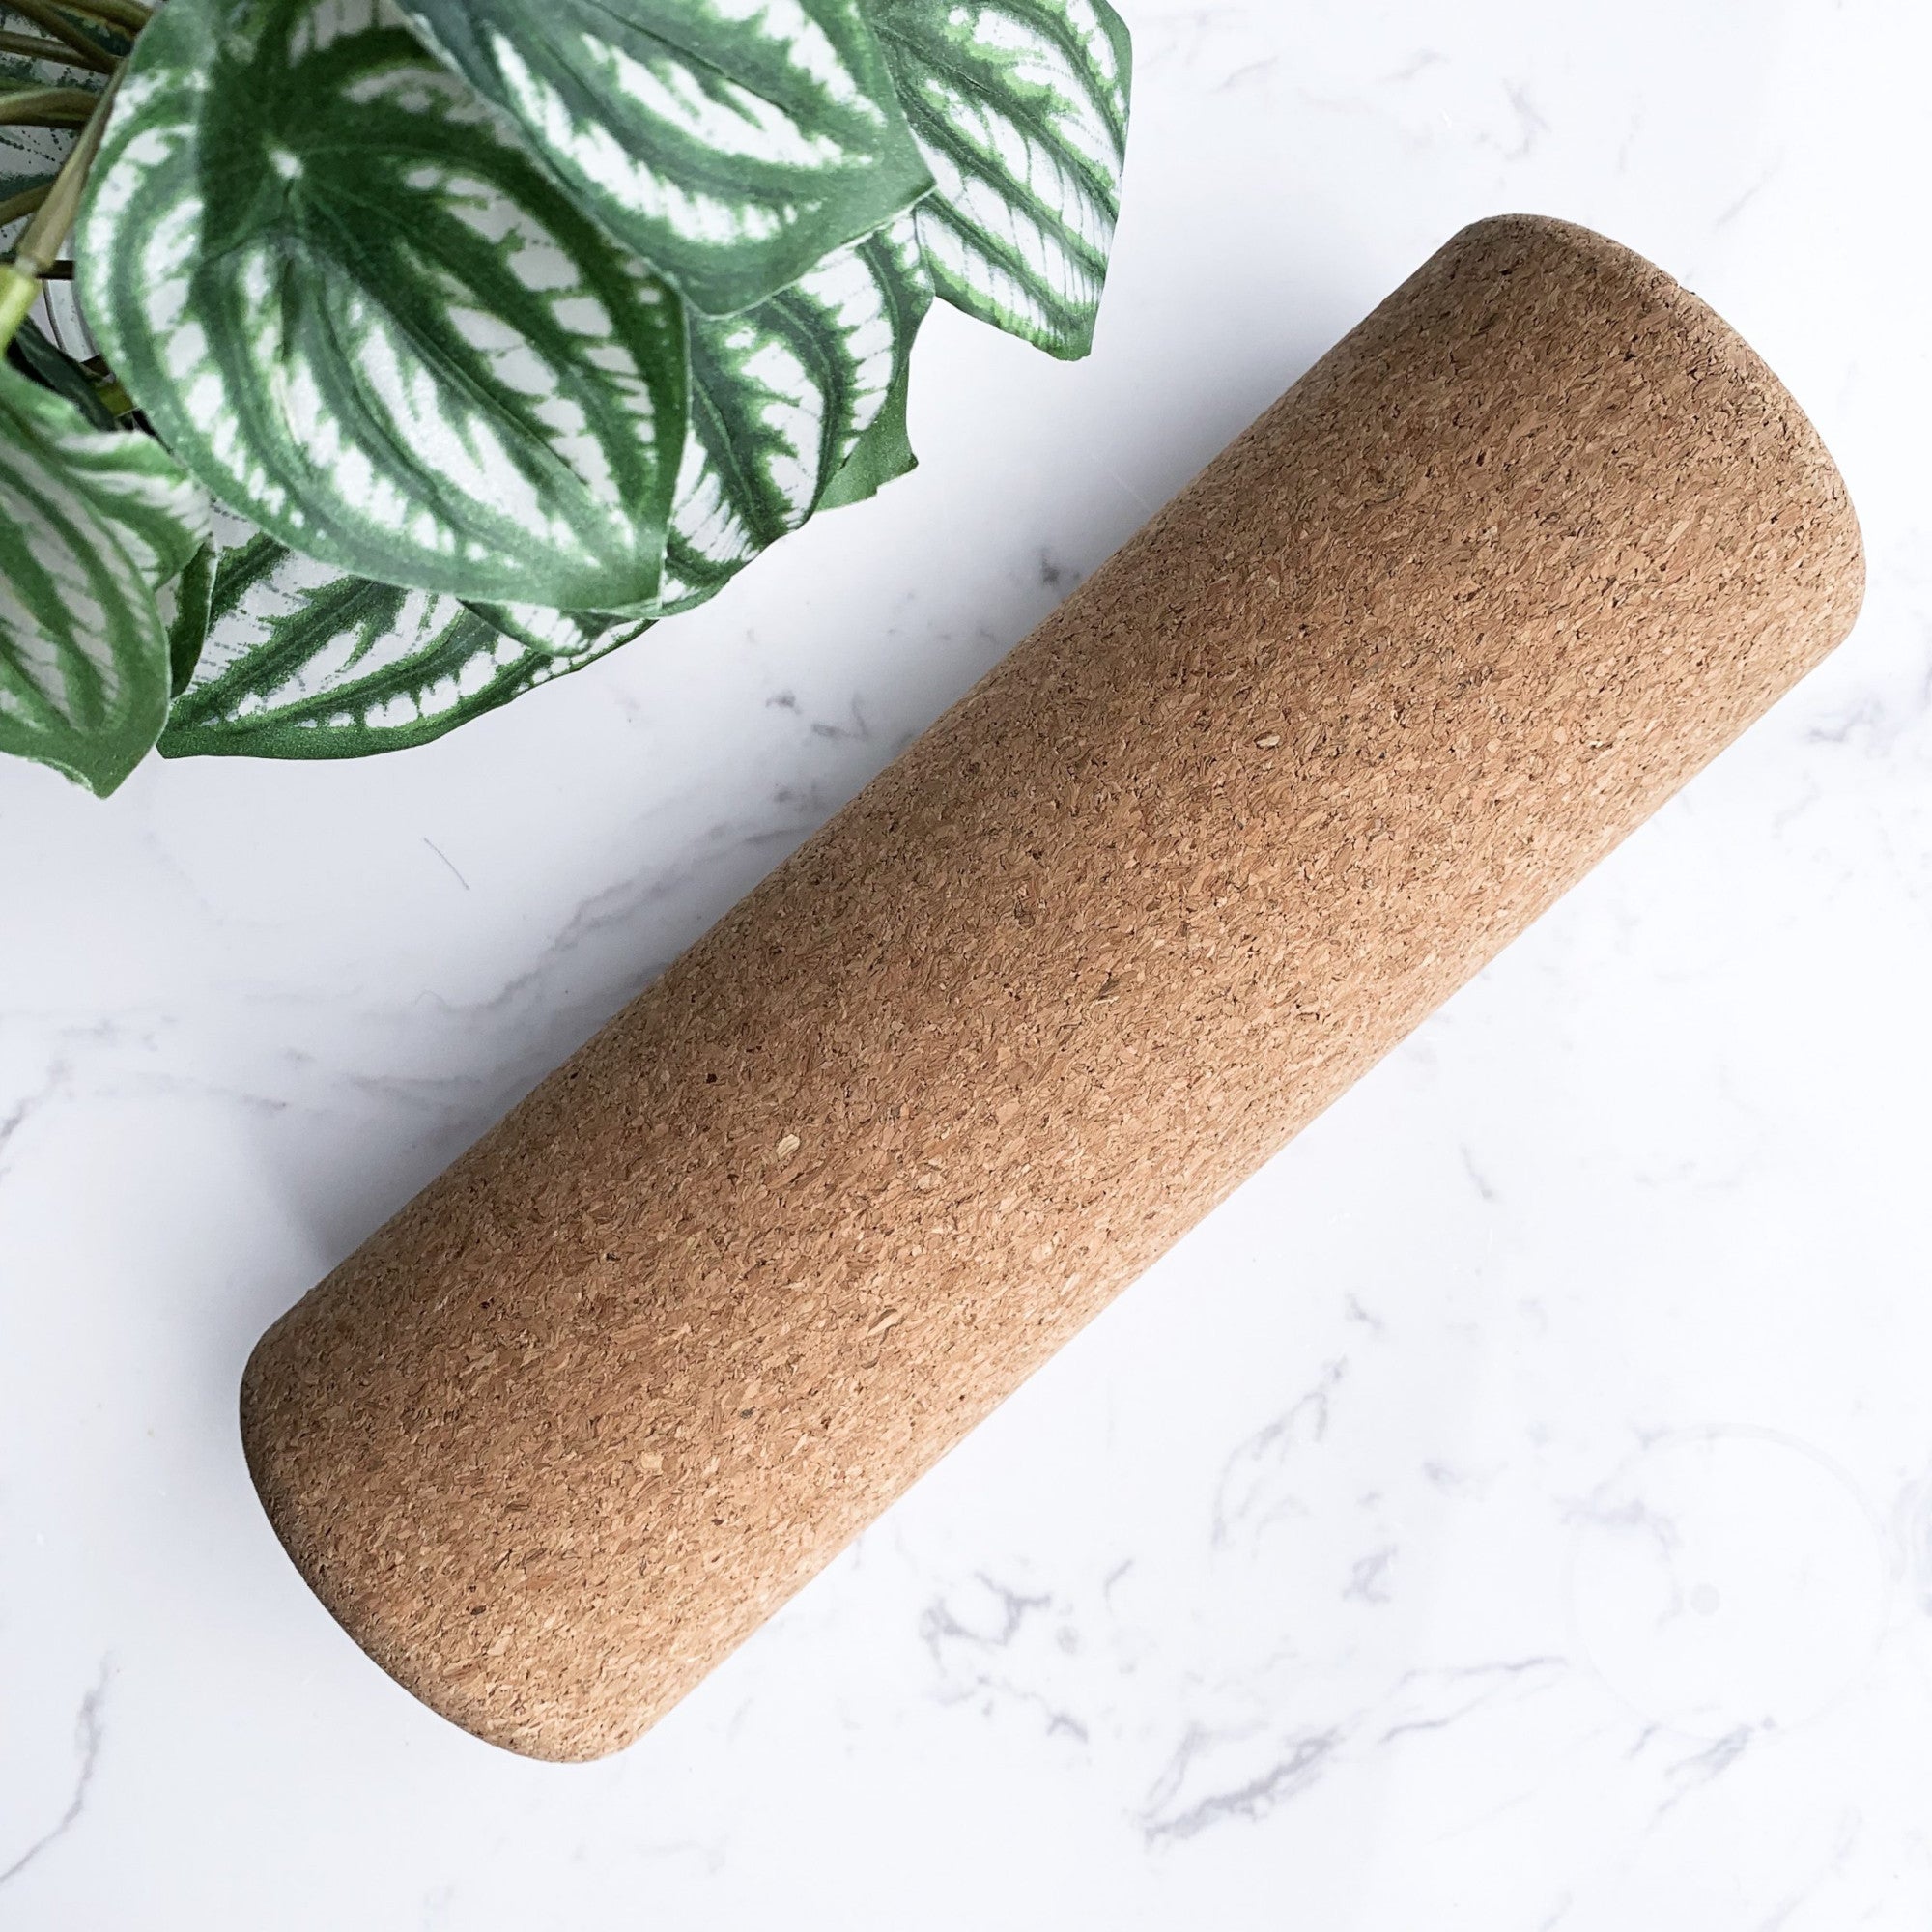 Foam roller made of organic cork